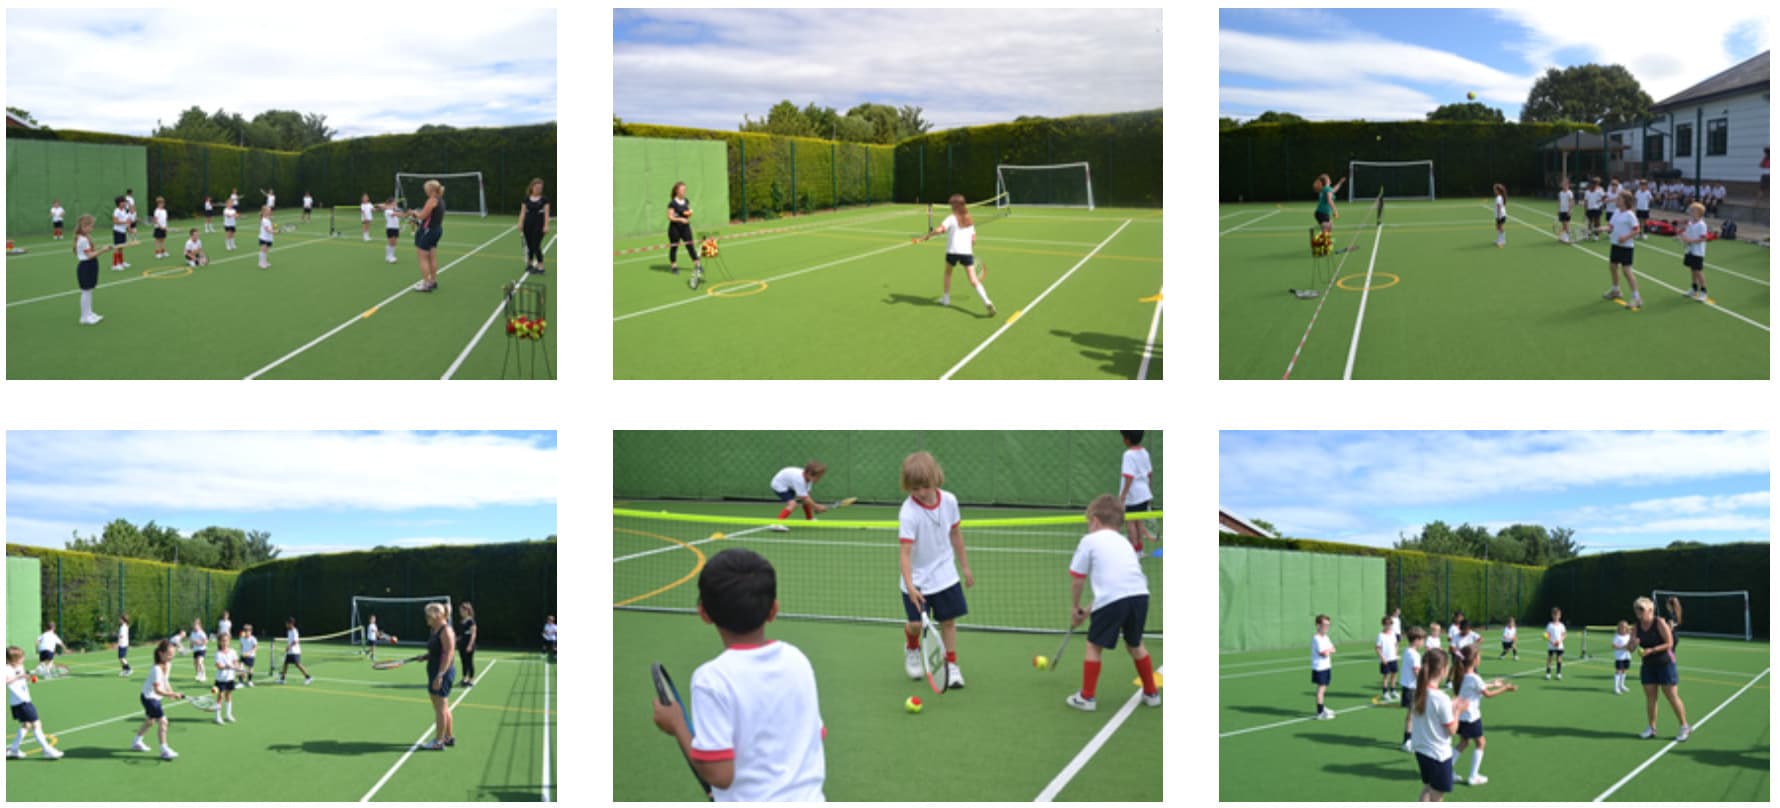 Fairholme Preparatory School: Anyone for Tennis?